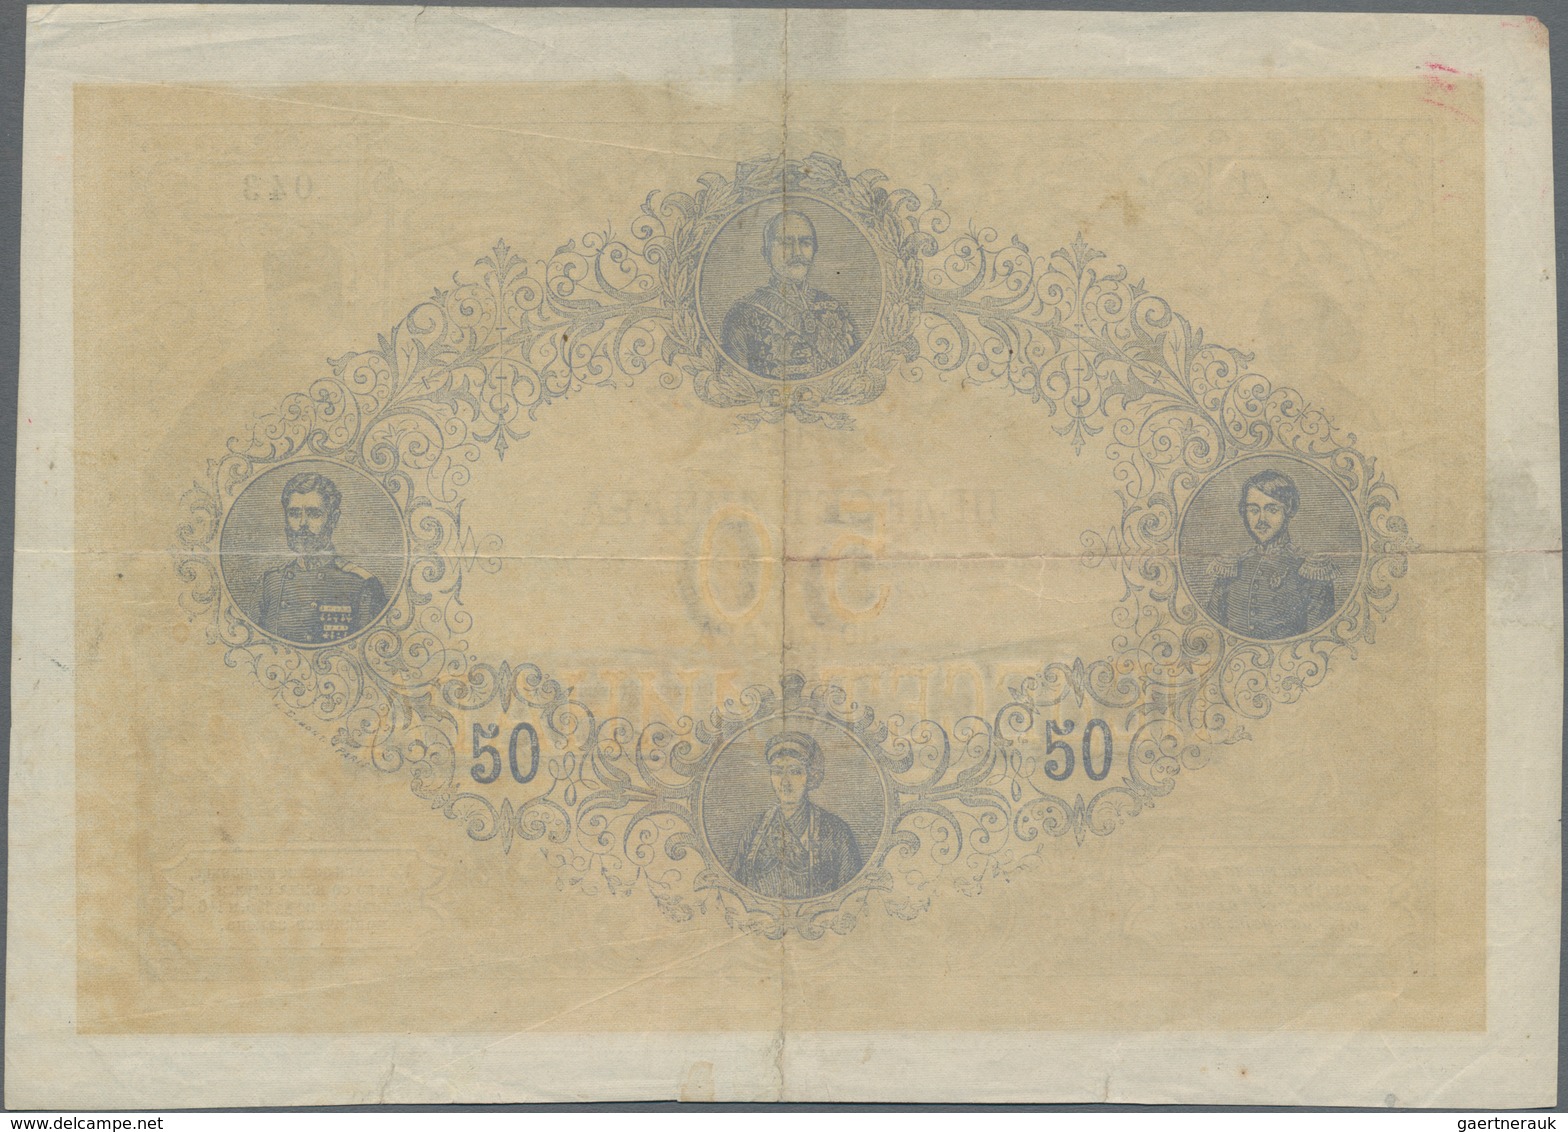 Serbia / Serbien: Kingdom Of Serbia 50 Dinara 1876, P.4, Extraordinary Rare Banknote In Great Origin - Serbia